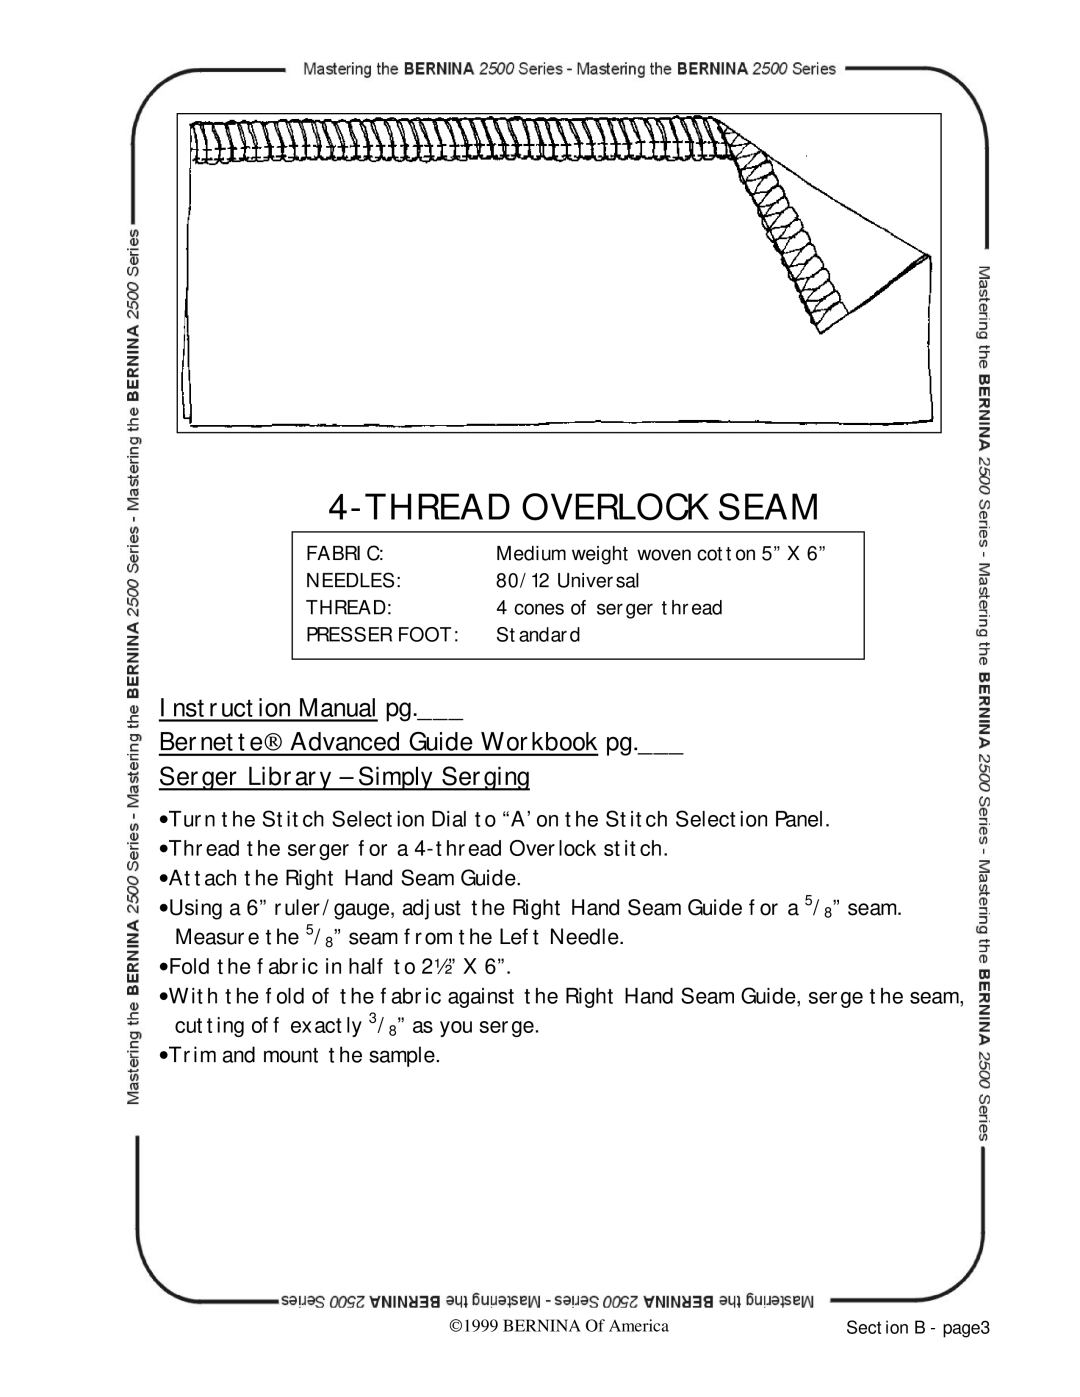 Bernina 2500 manual Thread Overlock Seam 